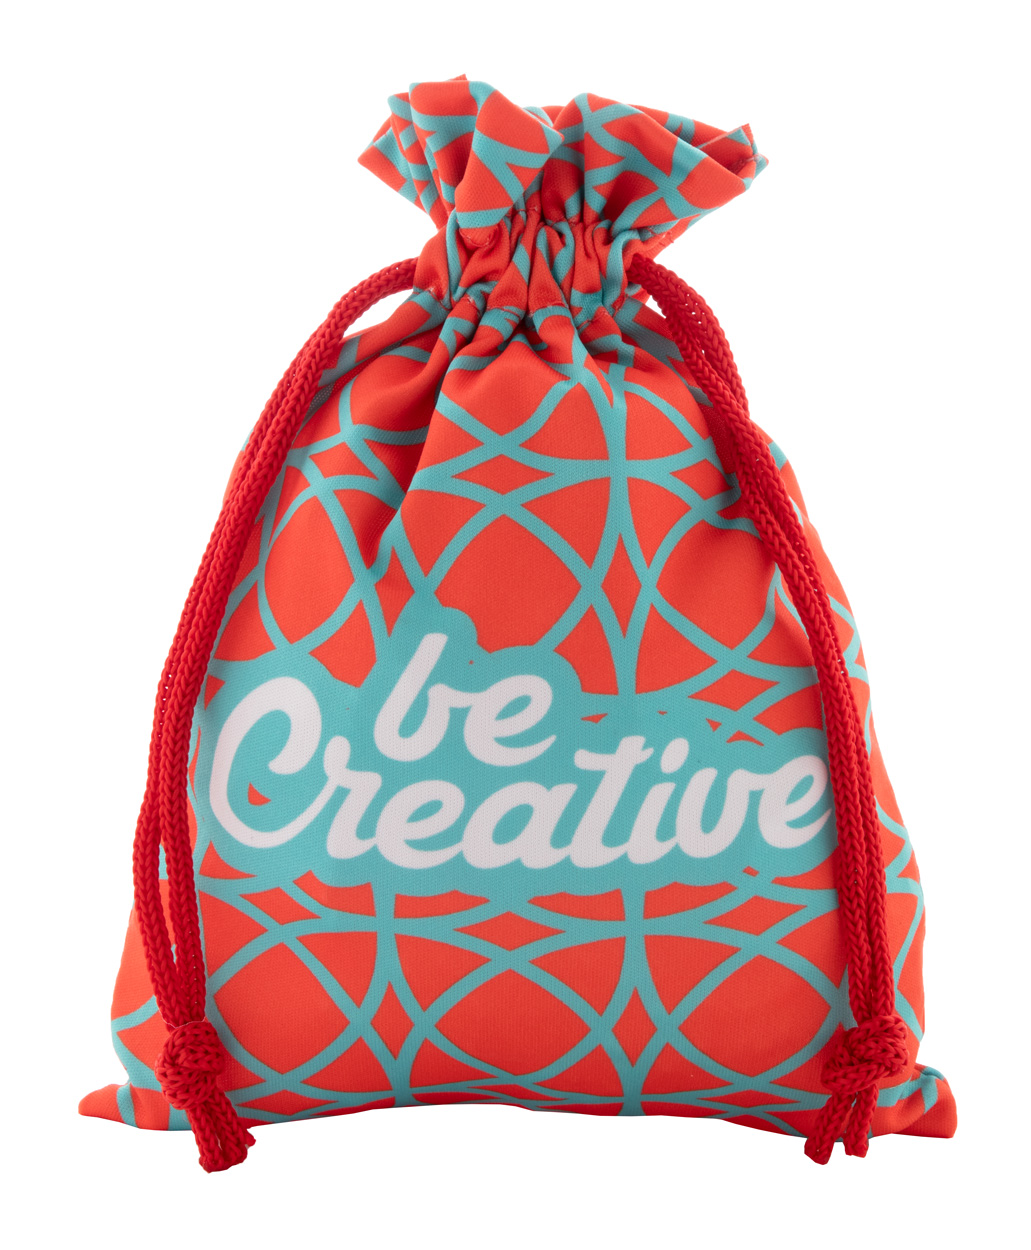 SuboGift M custom gift bag, medium - red